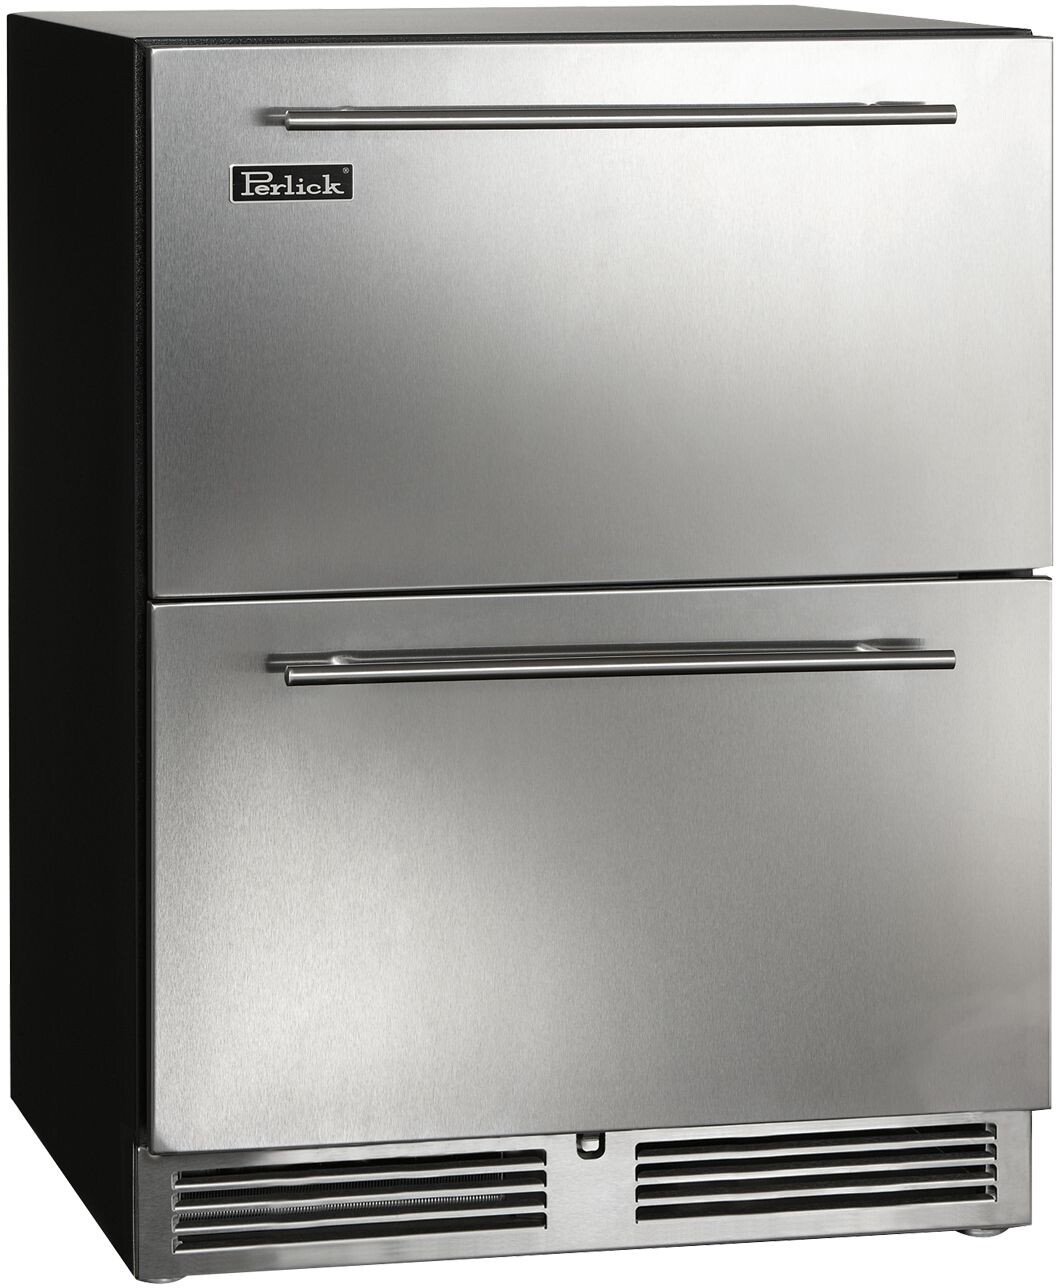 Perlick 24 Inch ADA Compliant 24 Refrigerator Drawers HA24RB45DL